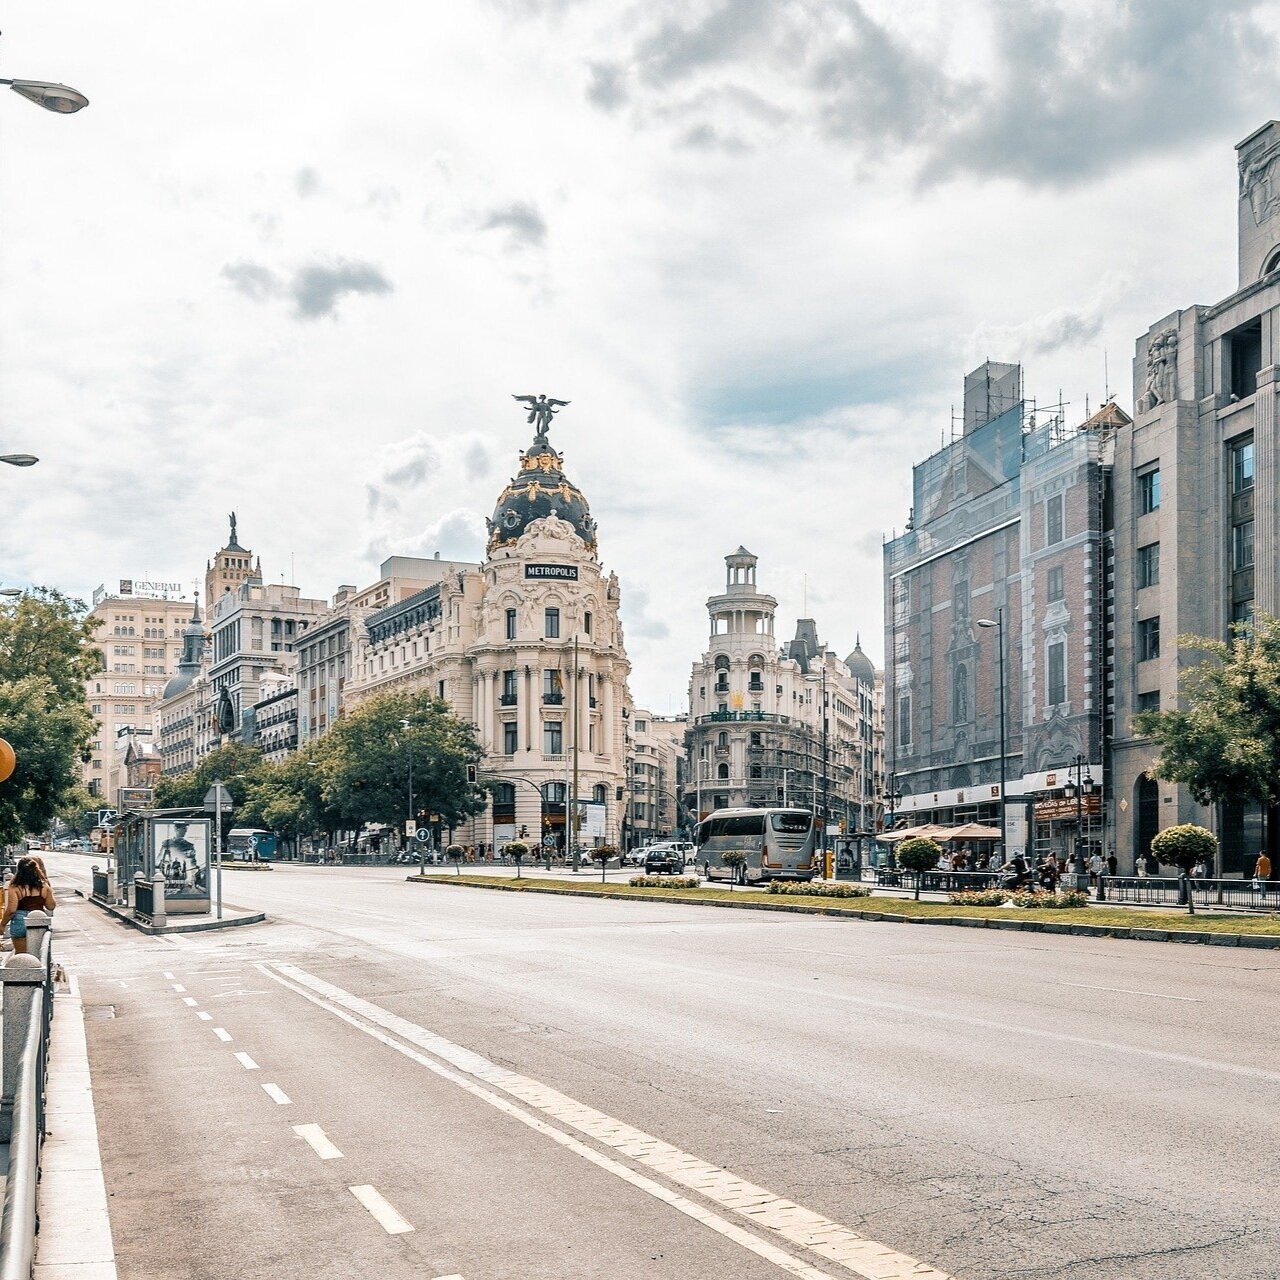 Madrid city center. Photo by c1n3ma on Pixabay